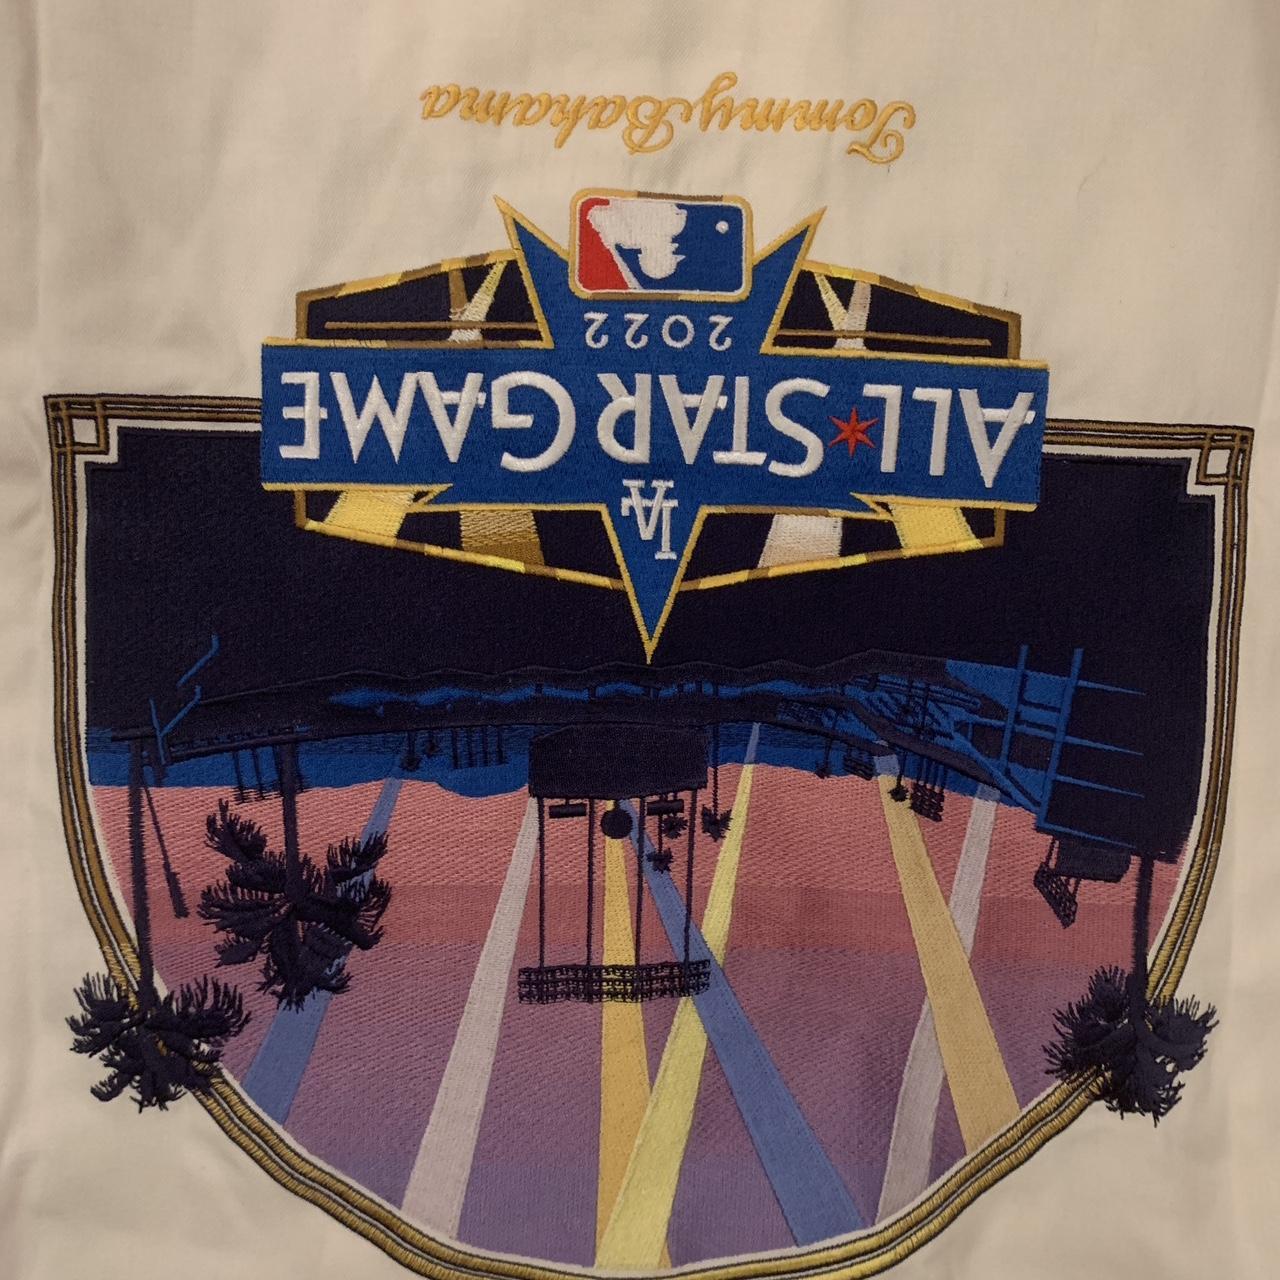 Tommy Bahama Men's ASG Camp Dodgers MLB Shirt Sz XXL continental